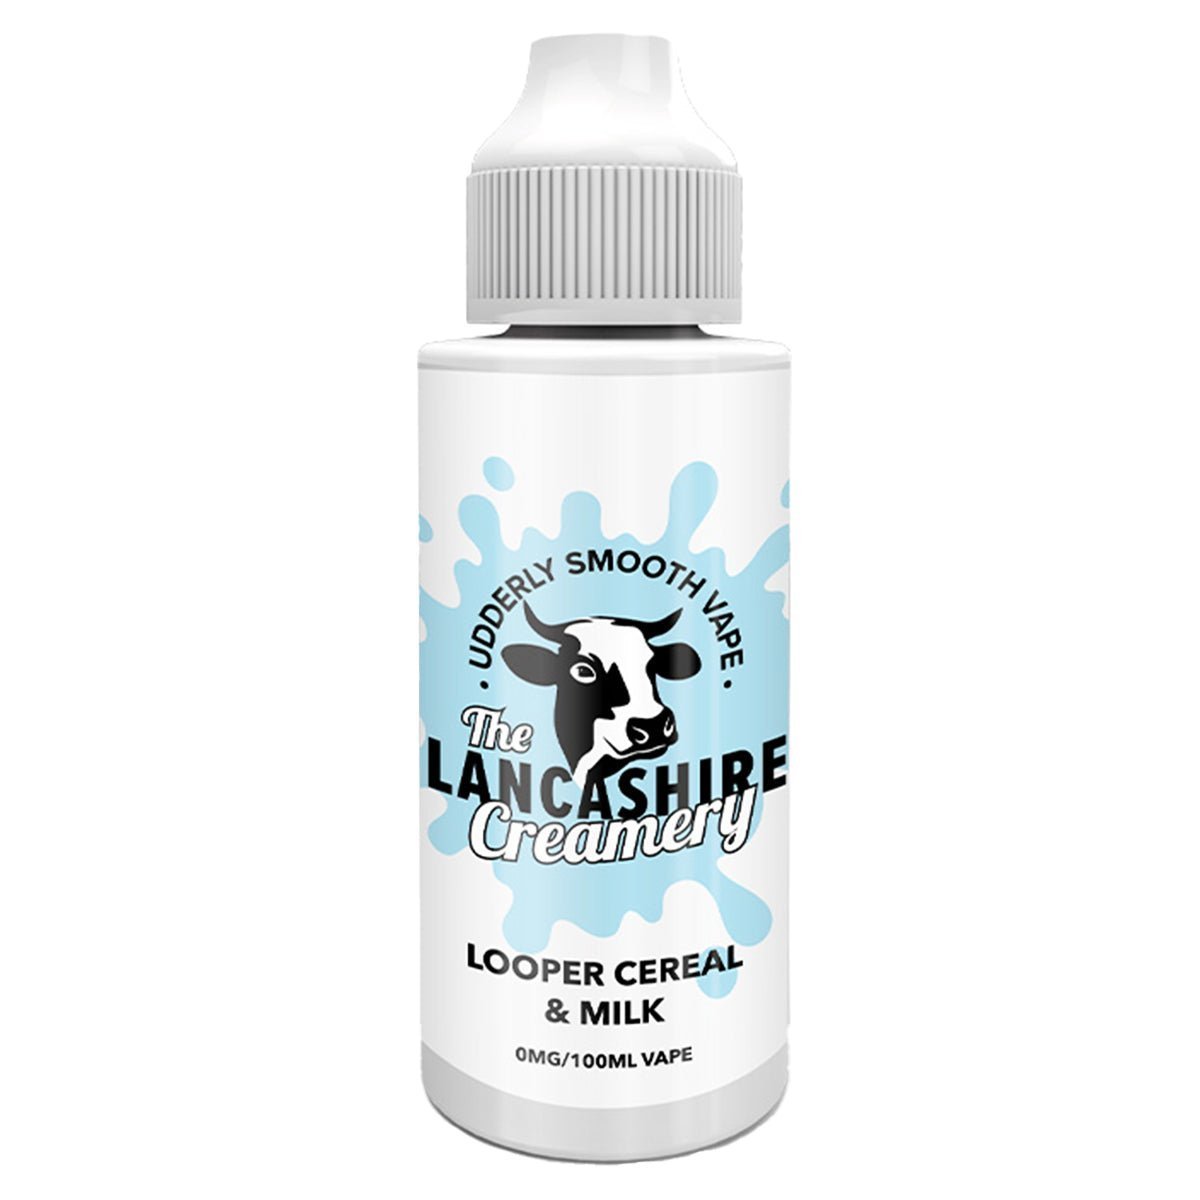 Looper Cereal & Milk 100ml Shortfill By The Lancashire Creamery - Manabush Eliquid - Tobacco E-liquid and Vape Juice